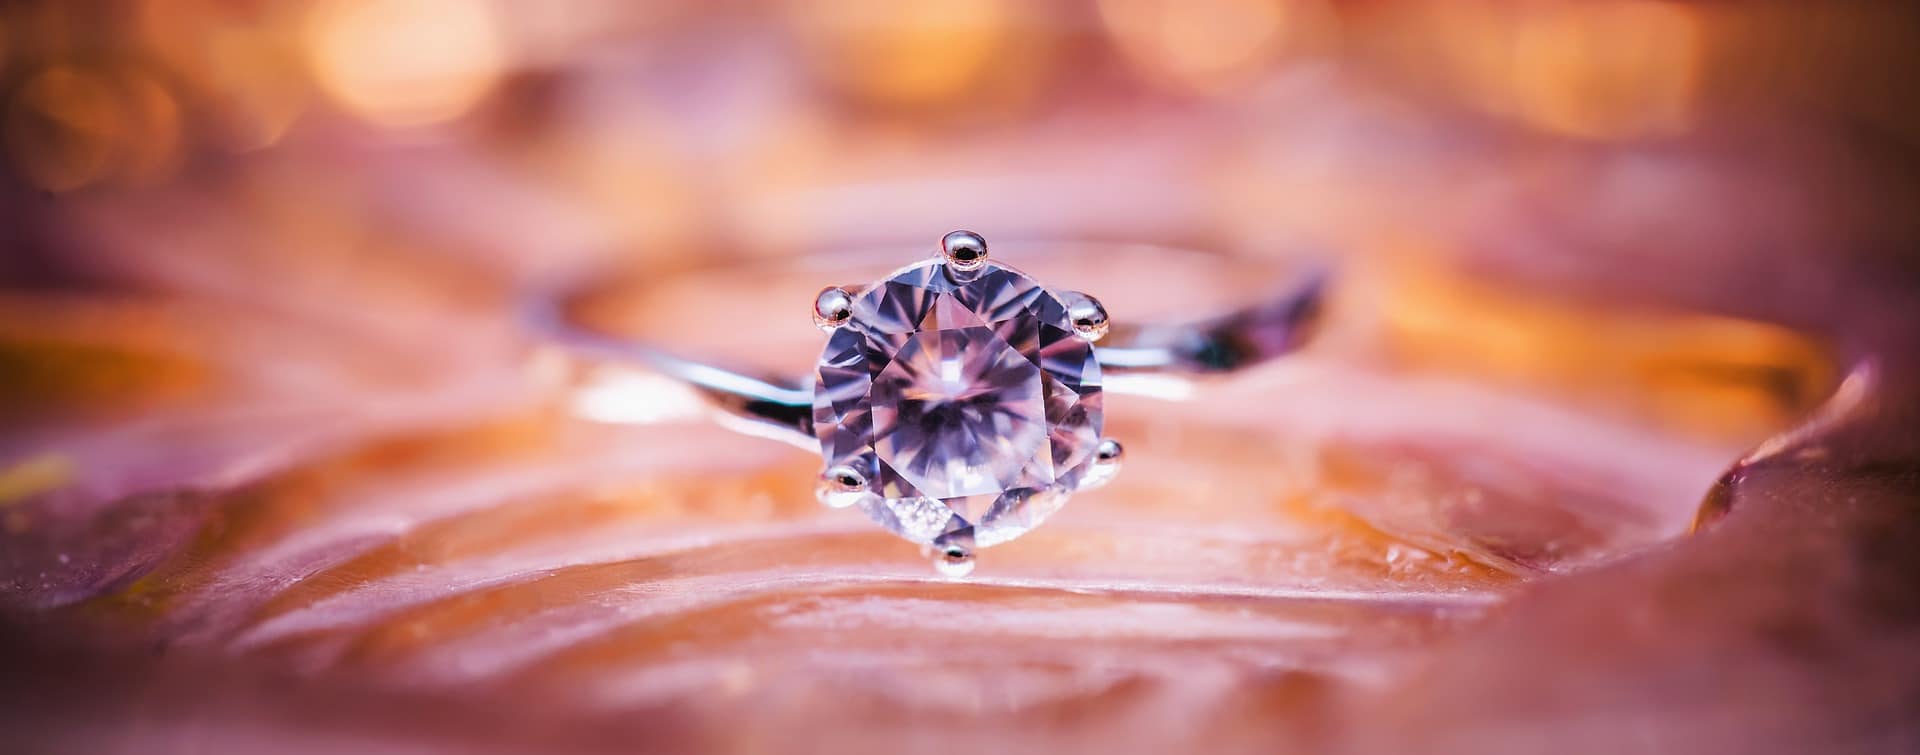 diamond jewellery wallpaper,ring,engagement ring,jewellery,diamond,fashion accessory